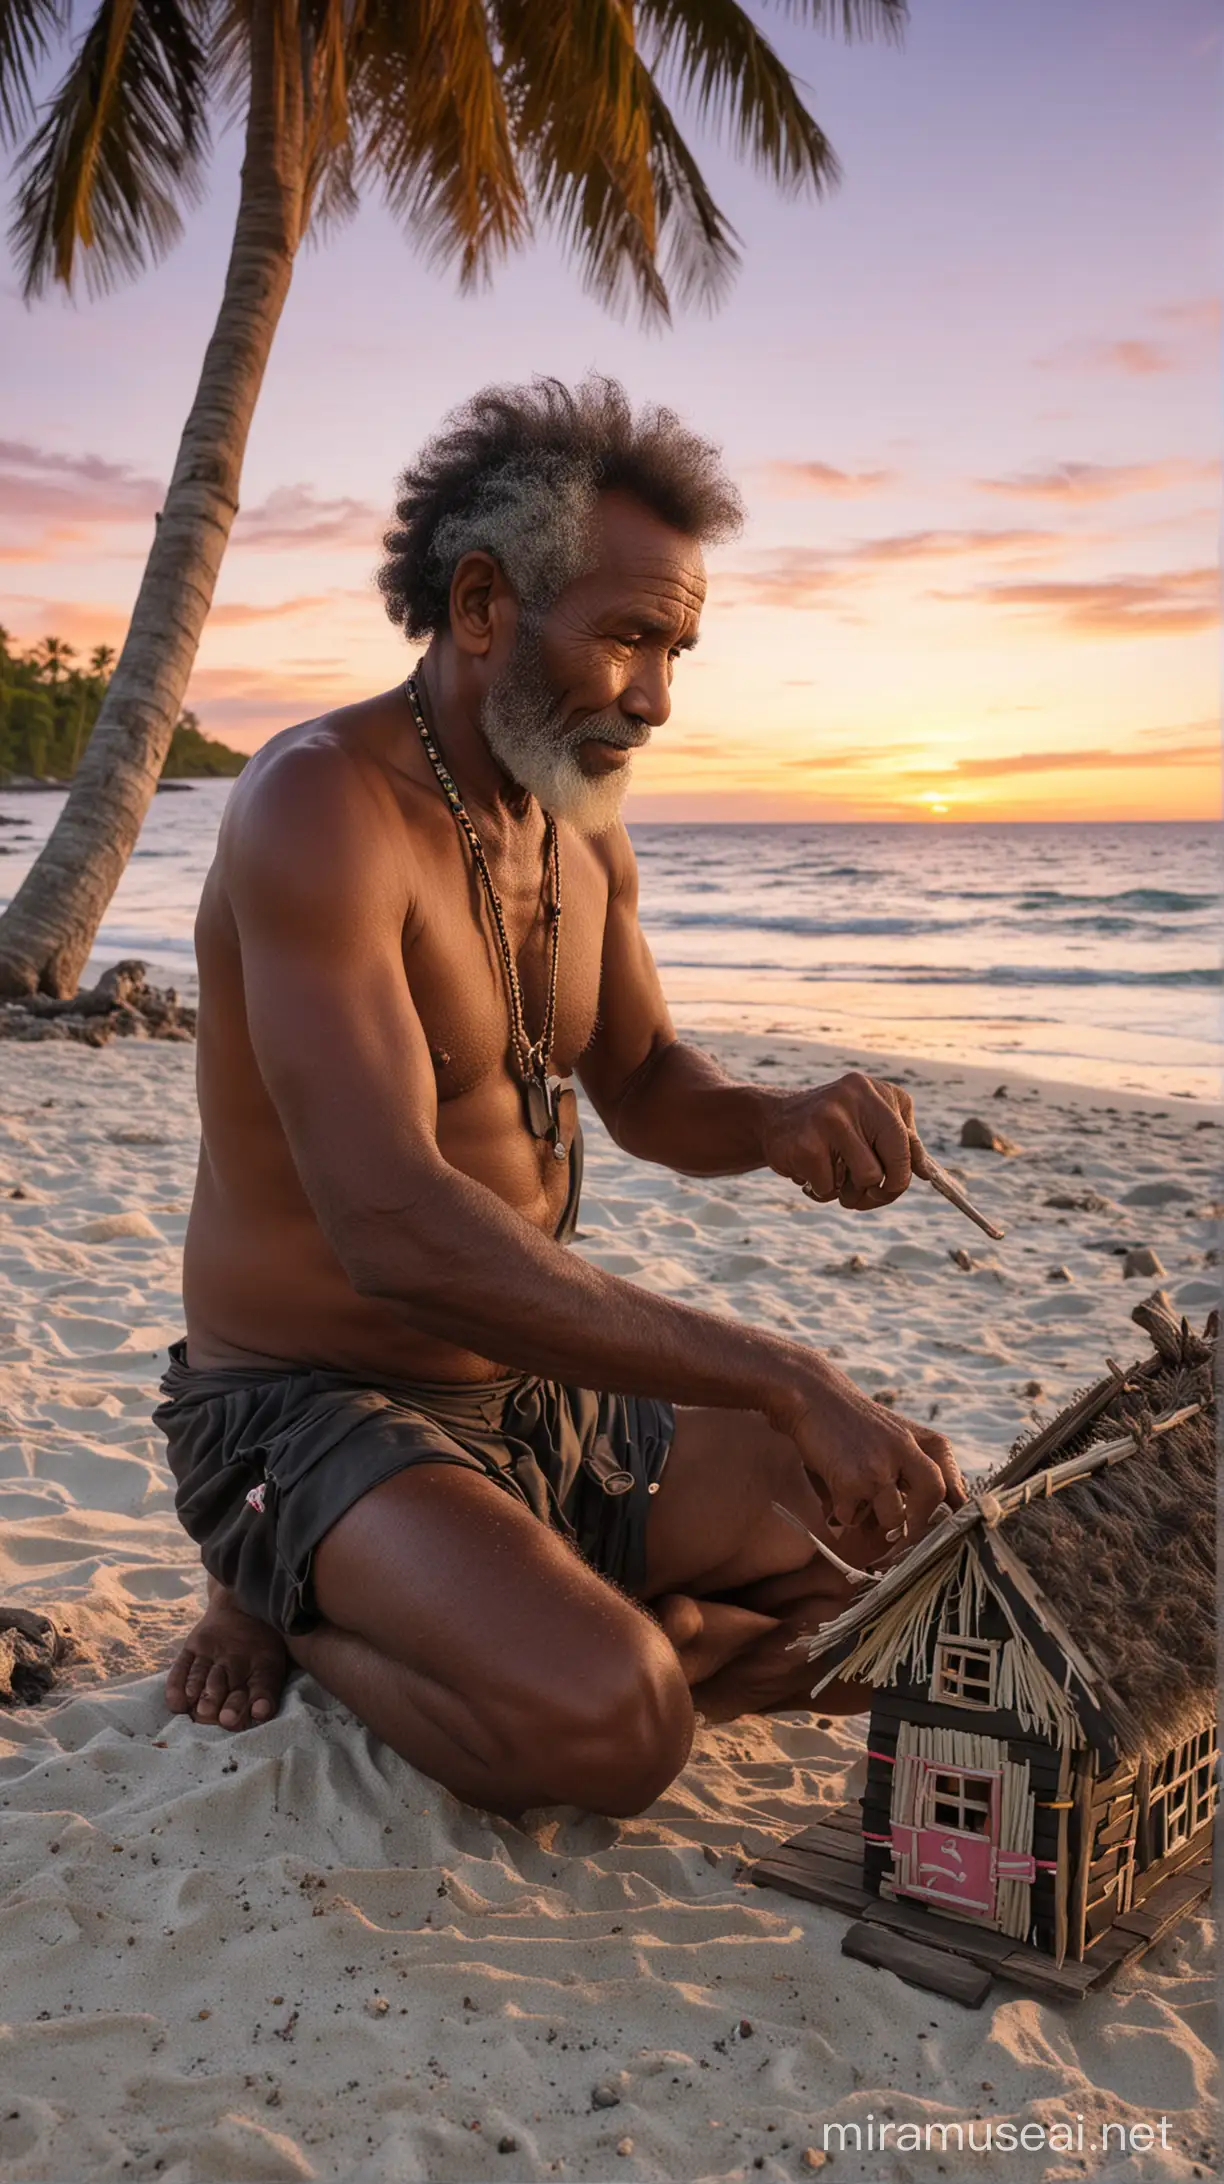 Seorang kakek papua, hitam berambut keriting sedang membuat mainan rumah - rumahan di pinggir pantai yang indah pada saat sunset